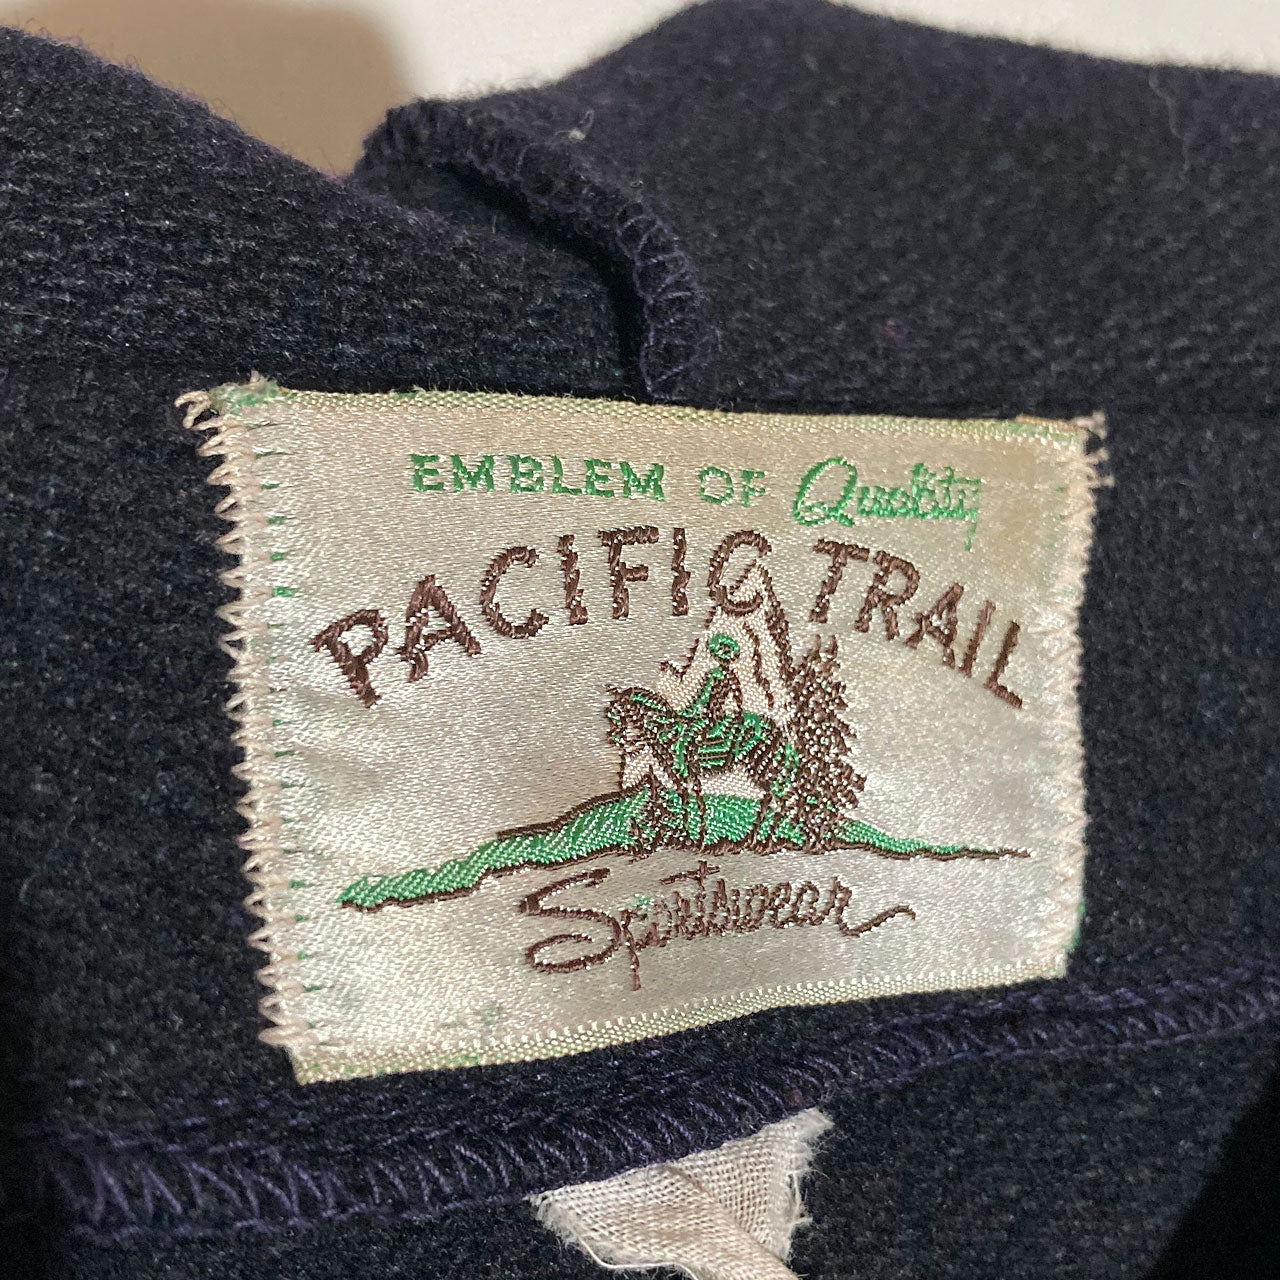 "70s Pacific trail" Wool Coat